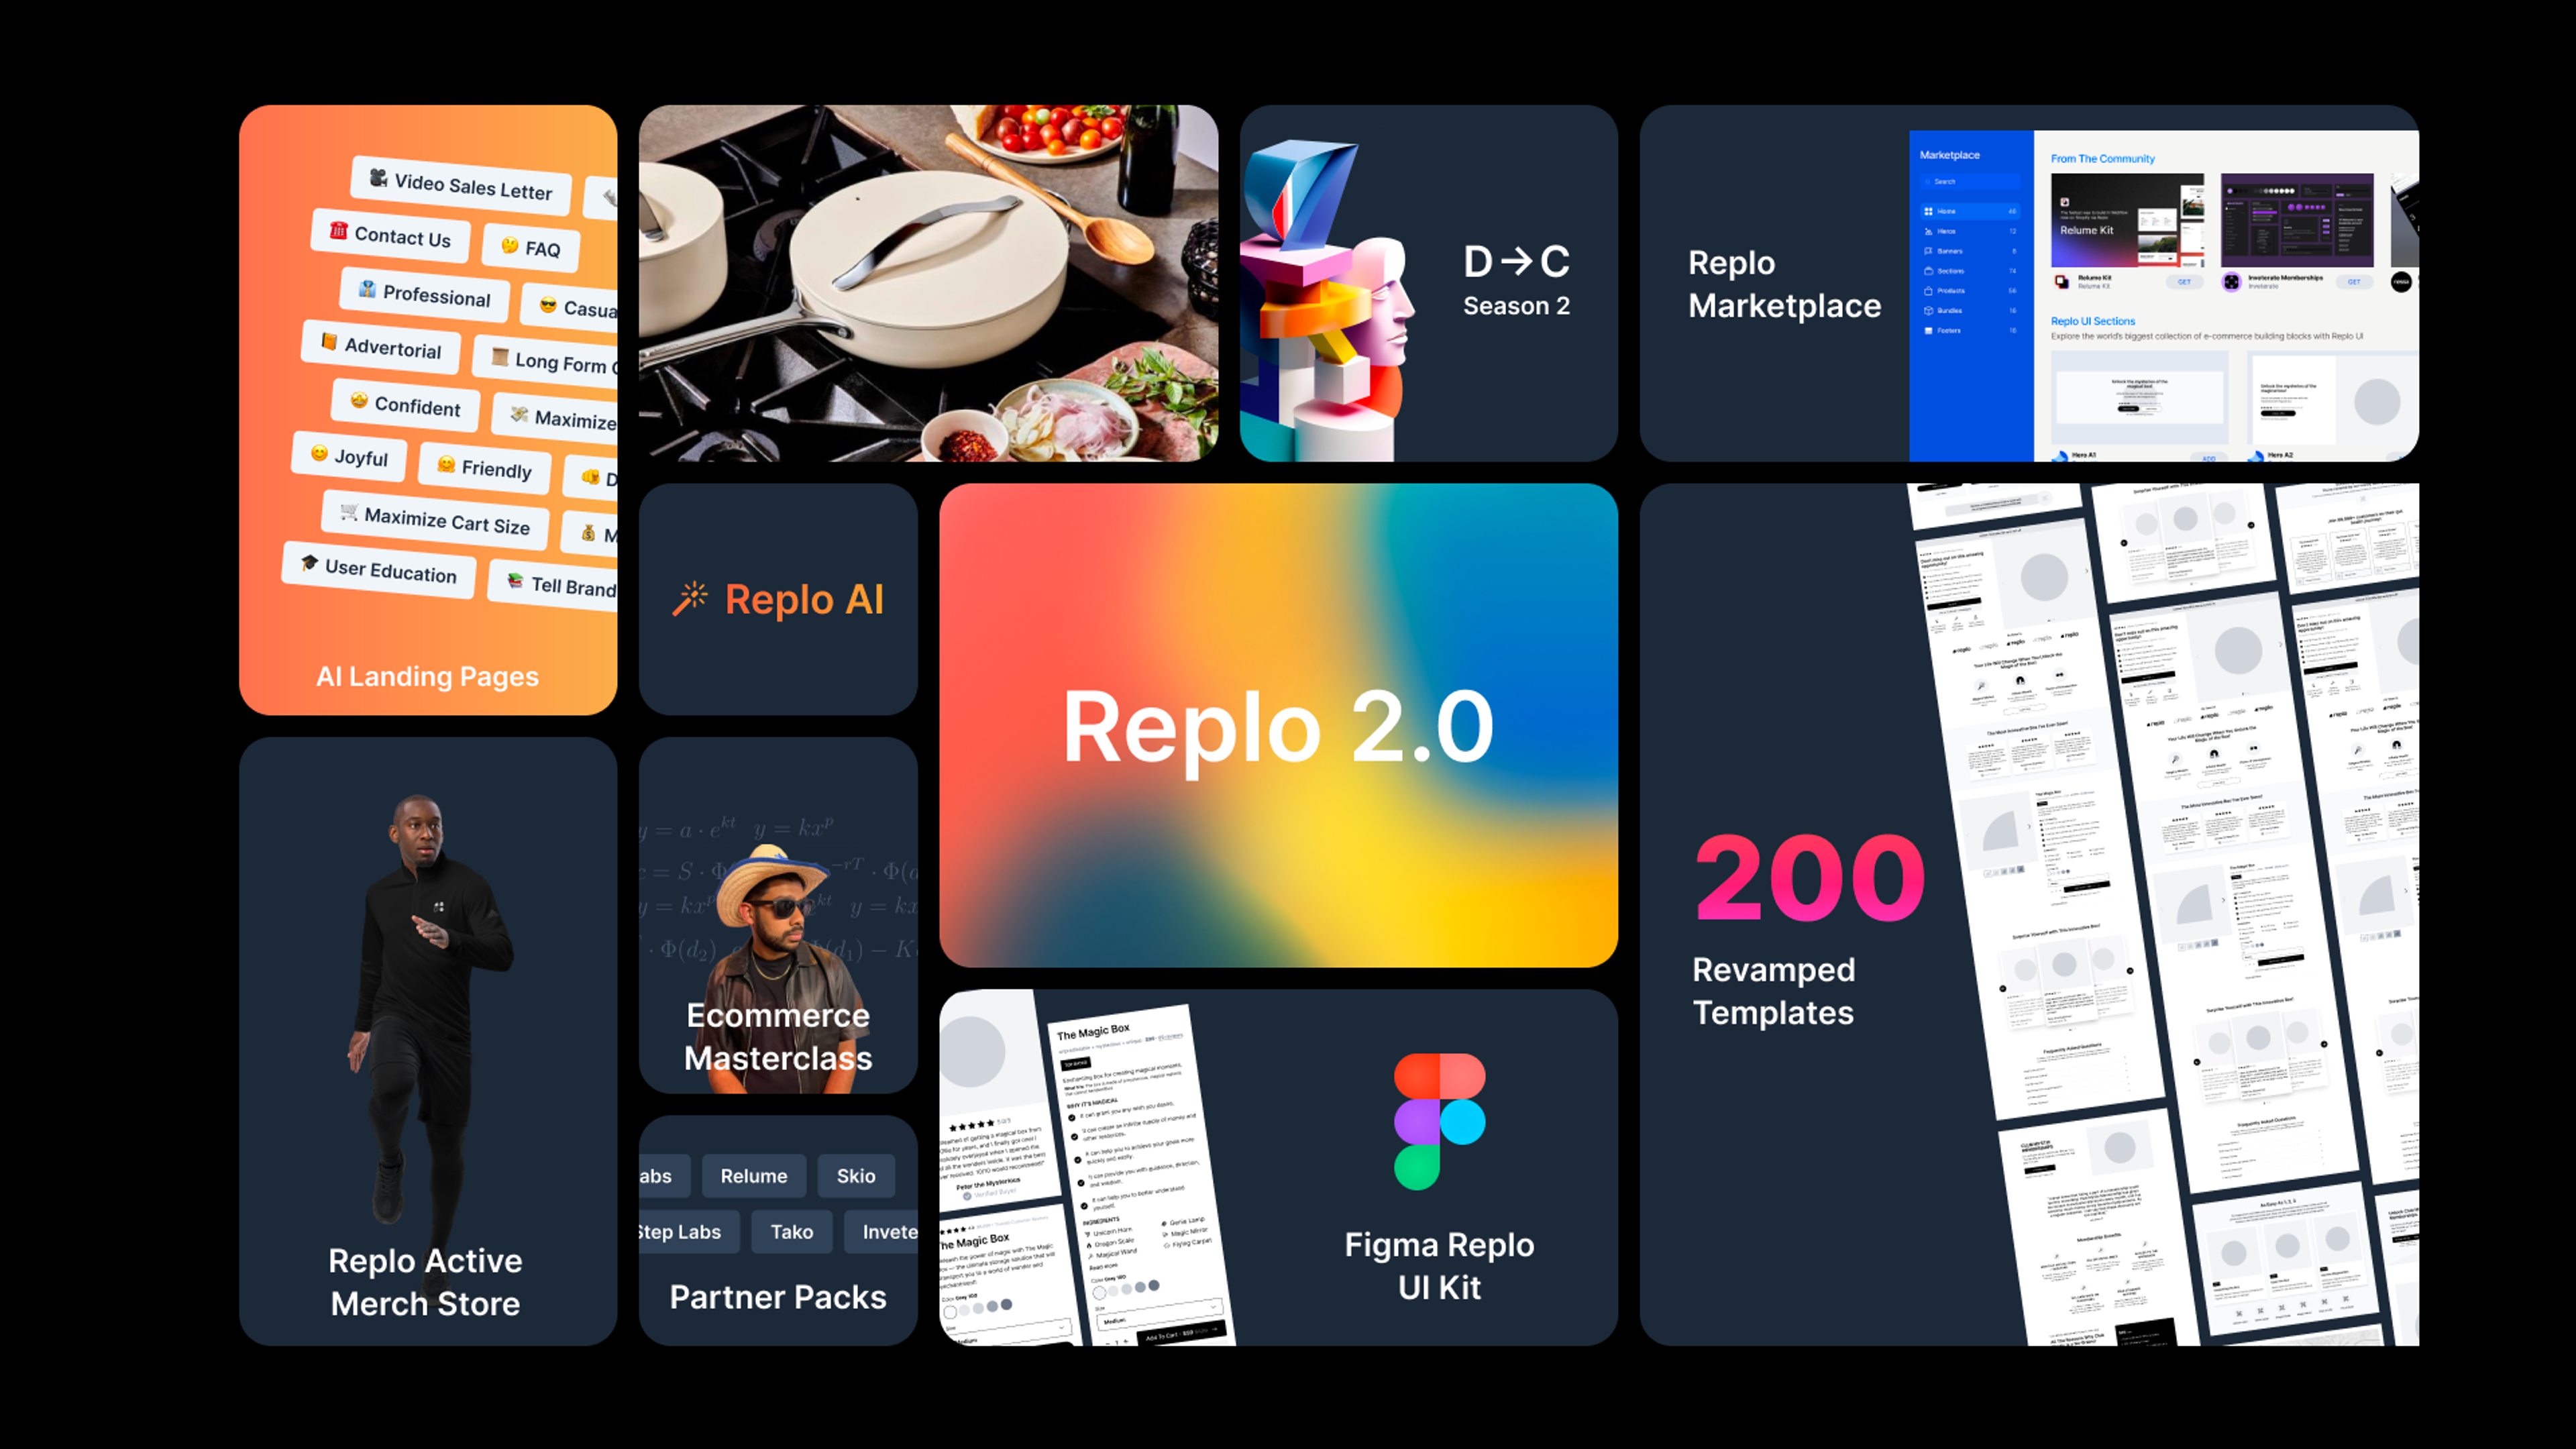 Replo 2.0 Launch